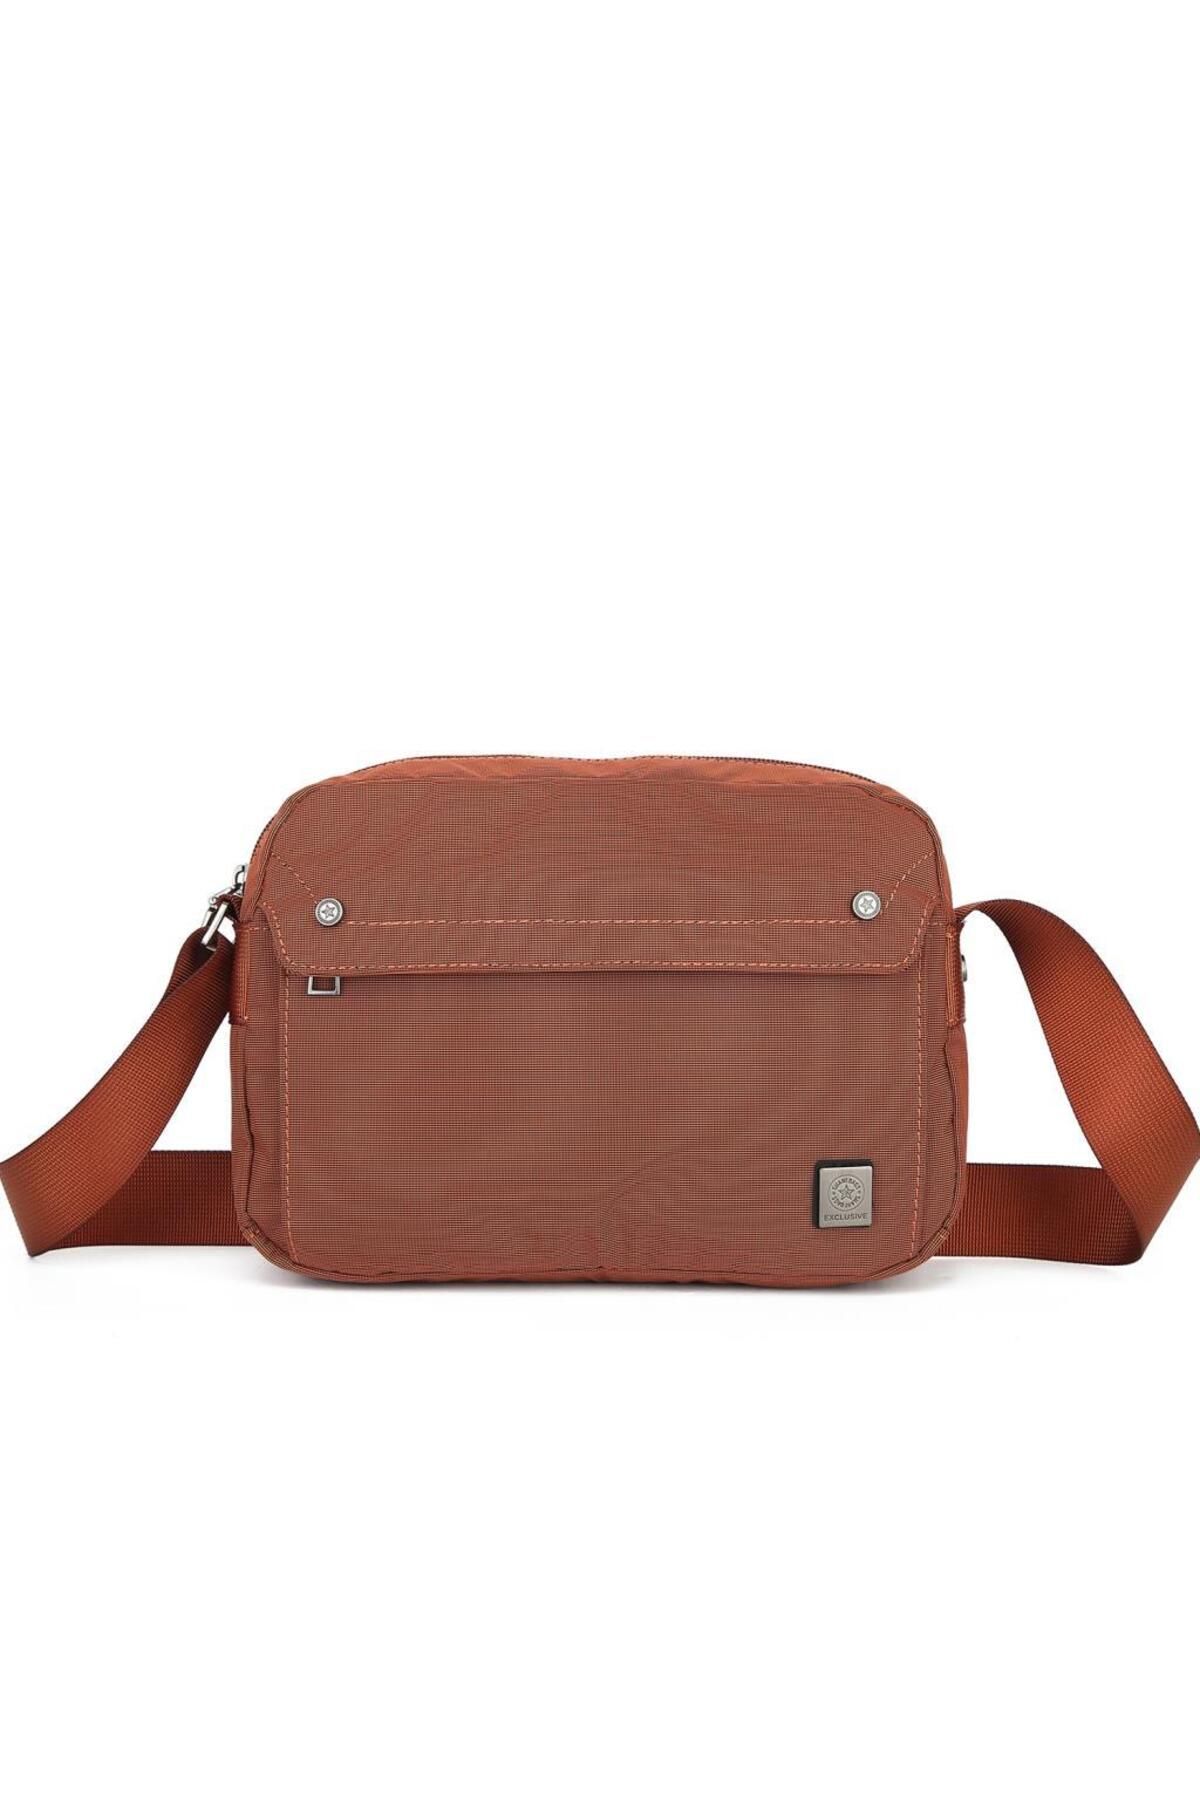 Smart Bags Exclusive Serisi Uniseks Postacı Çantası Smart Bags 8703